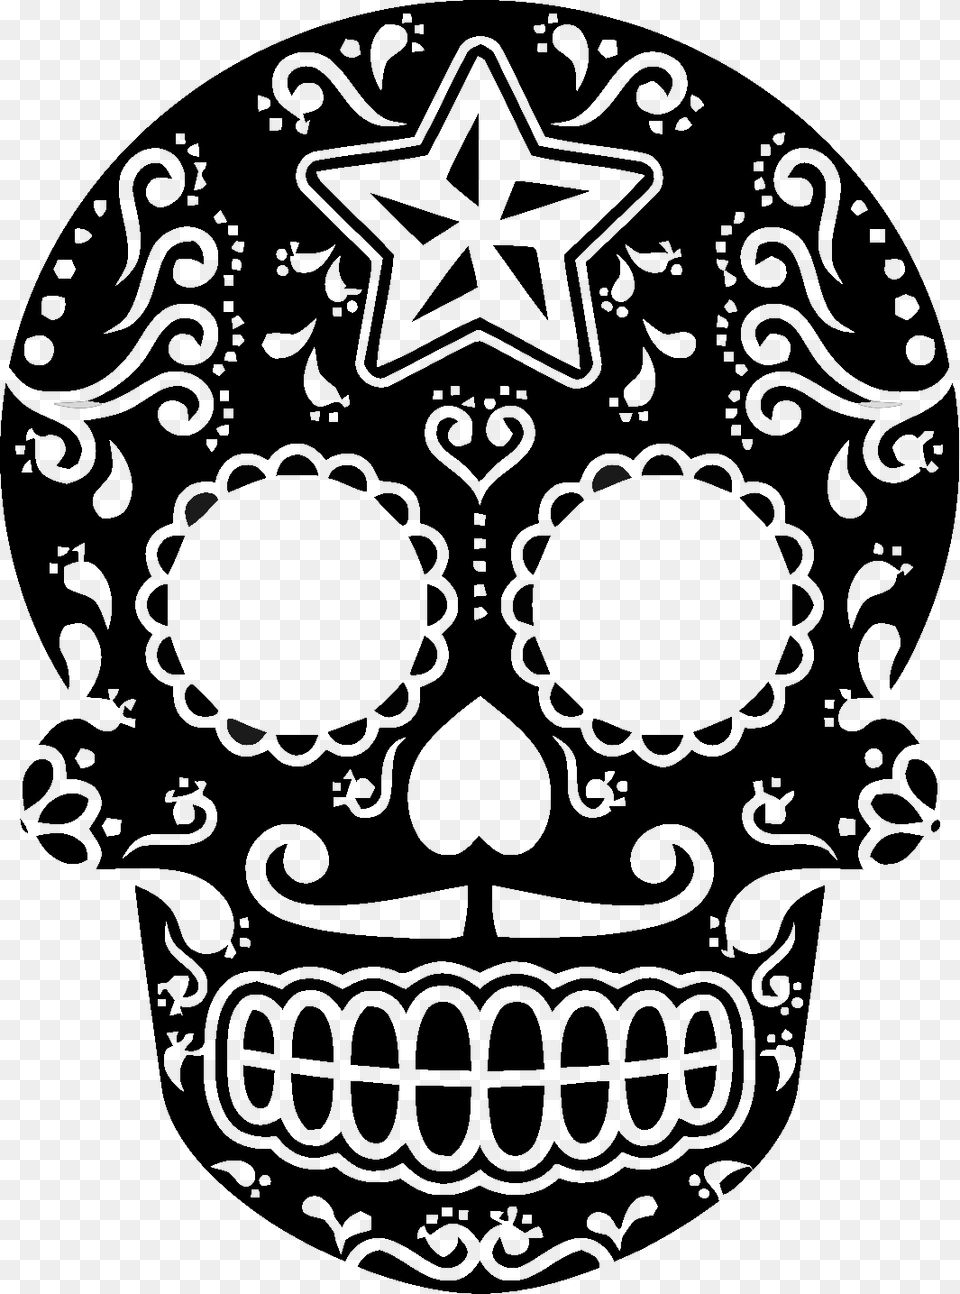 Dia De Los Muertos Skull Skull, Blackboard, Symbol, Emblem, Logo Png Image